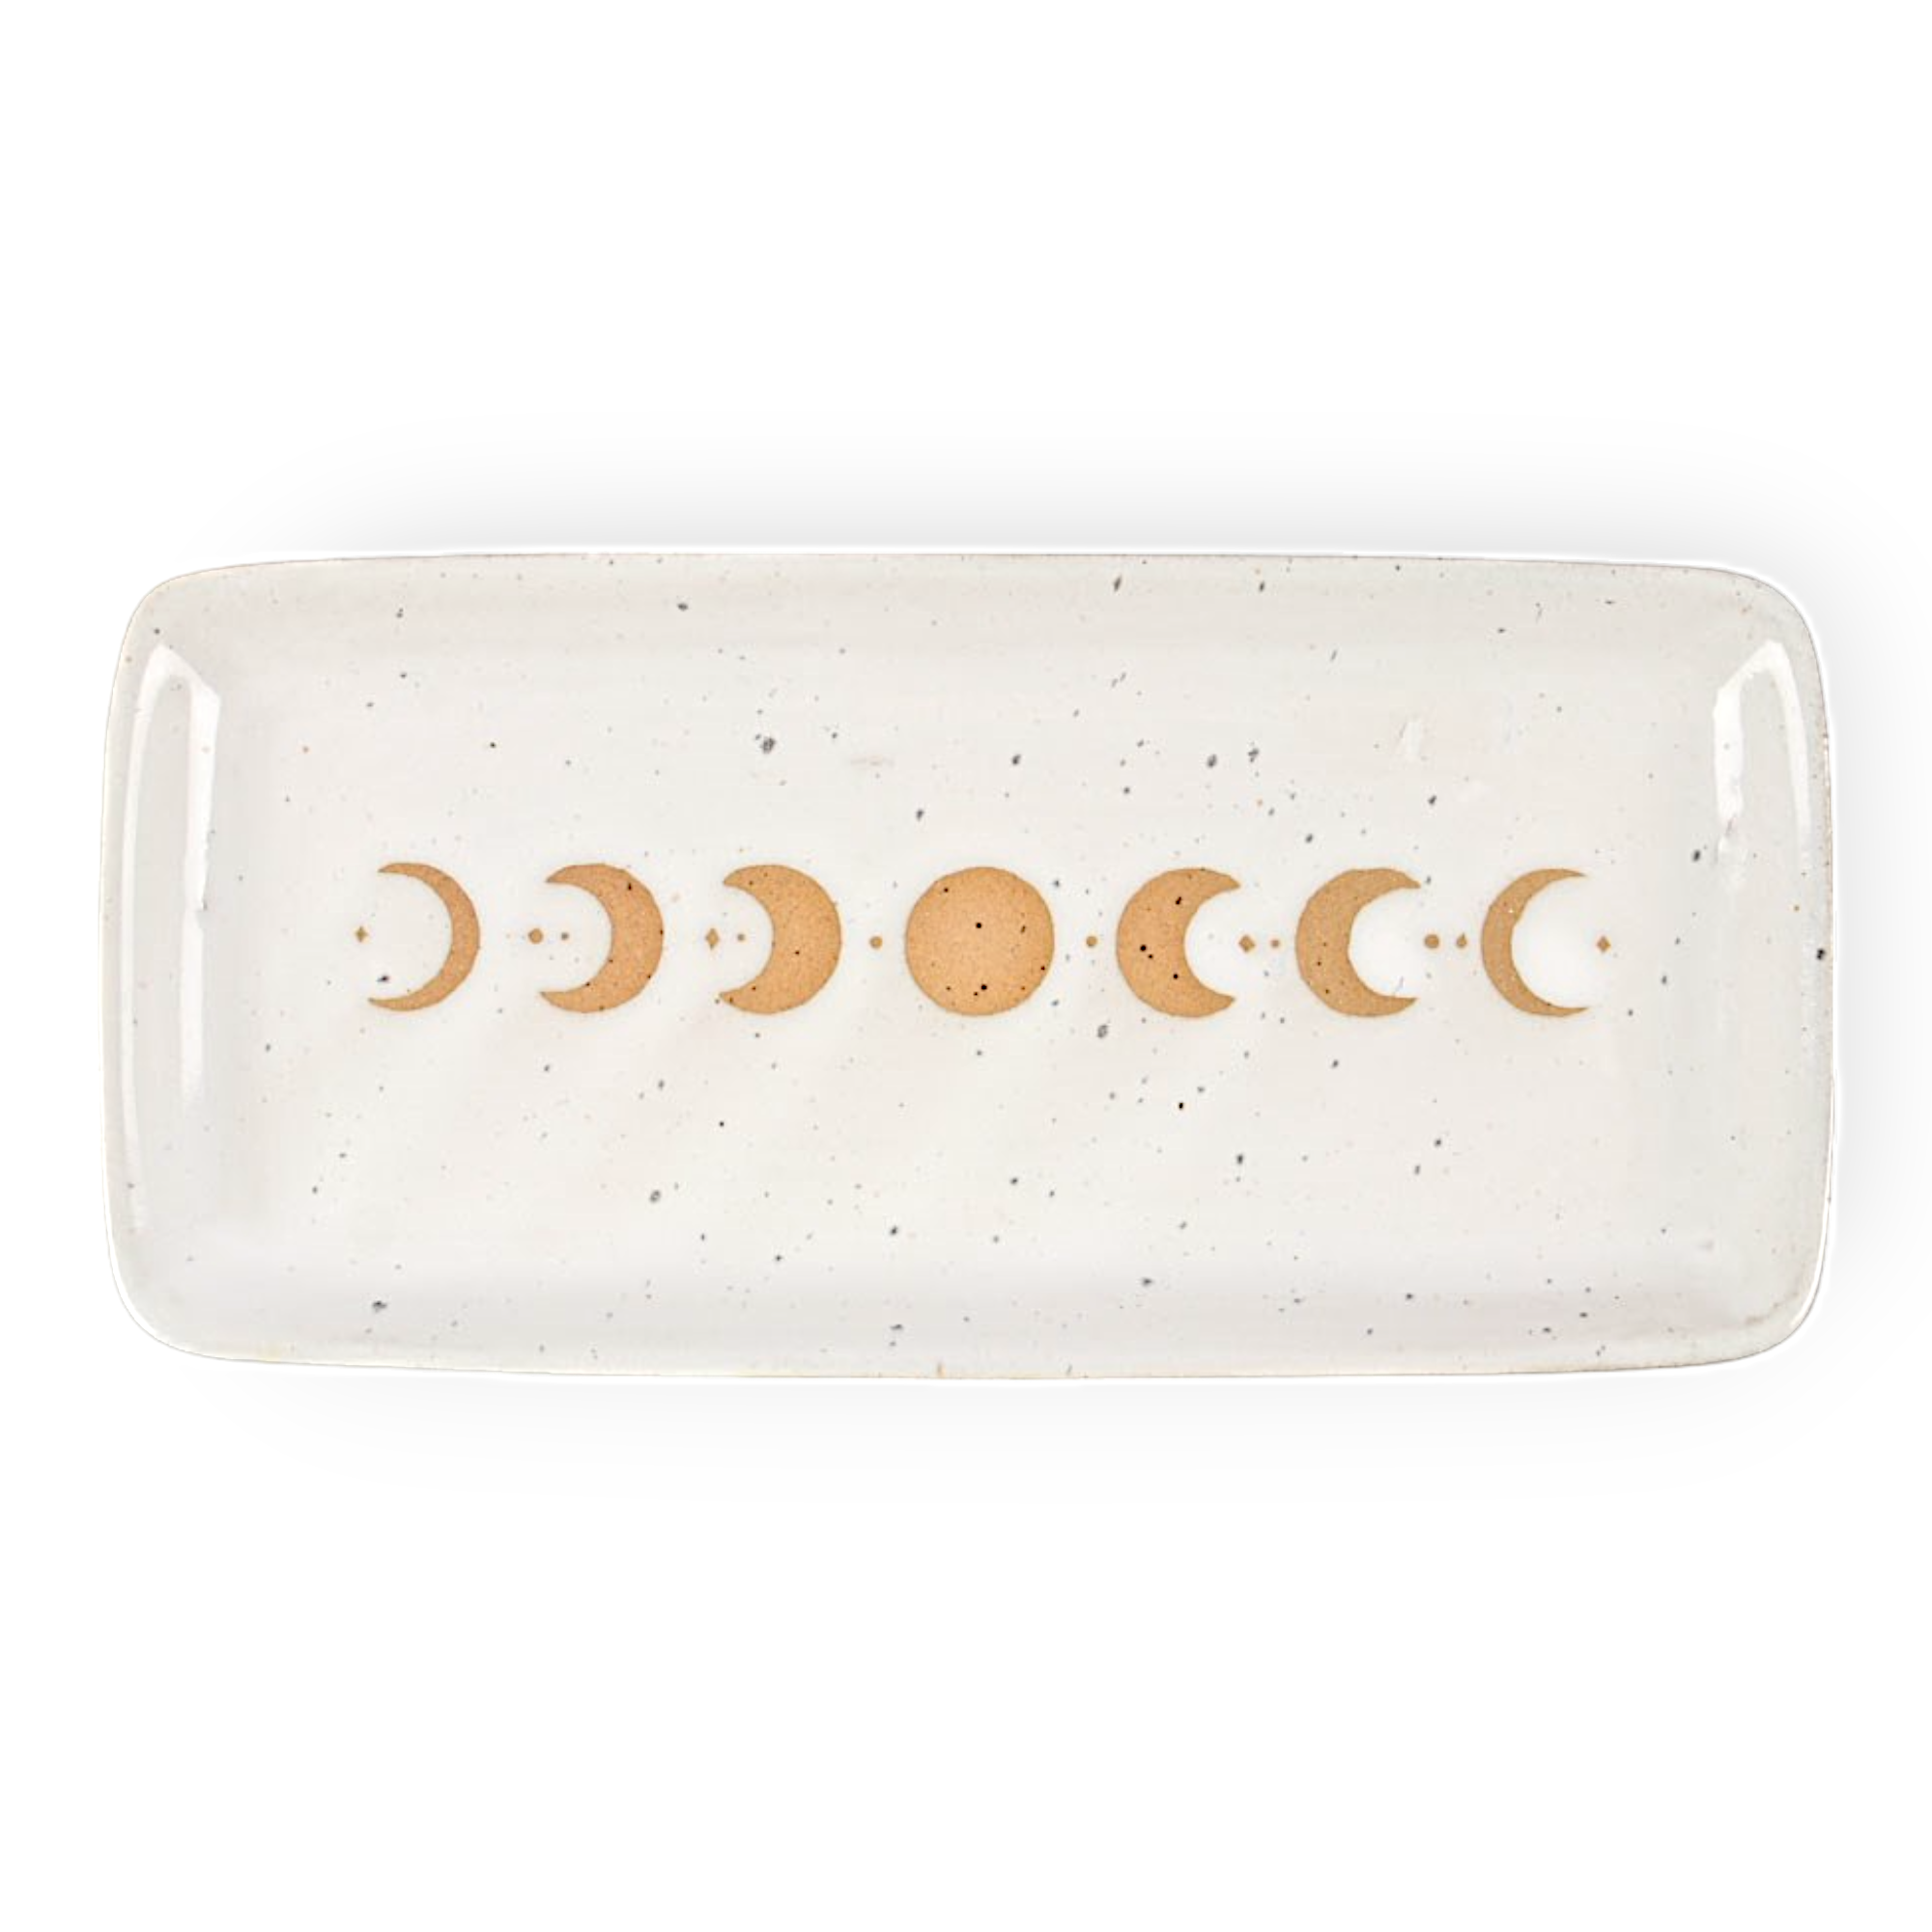 Keramik Teller Mondphasen